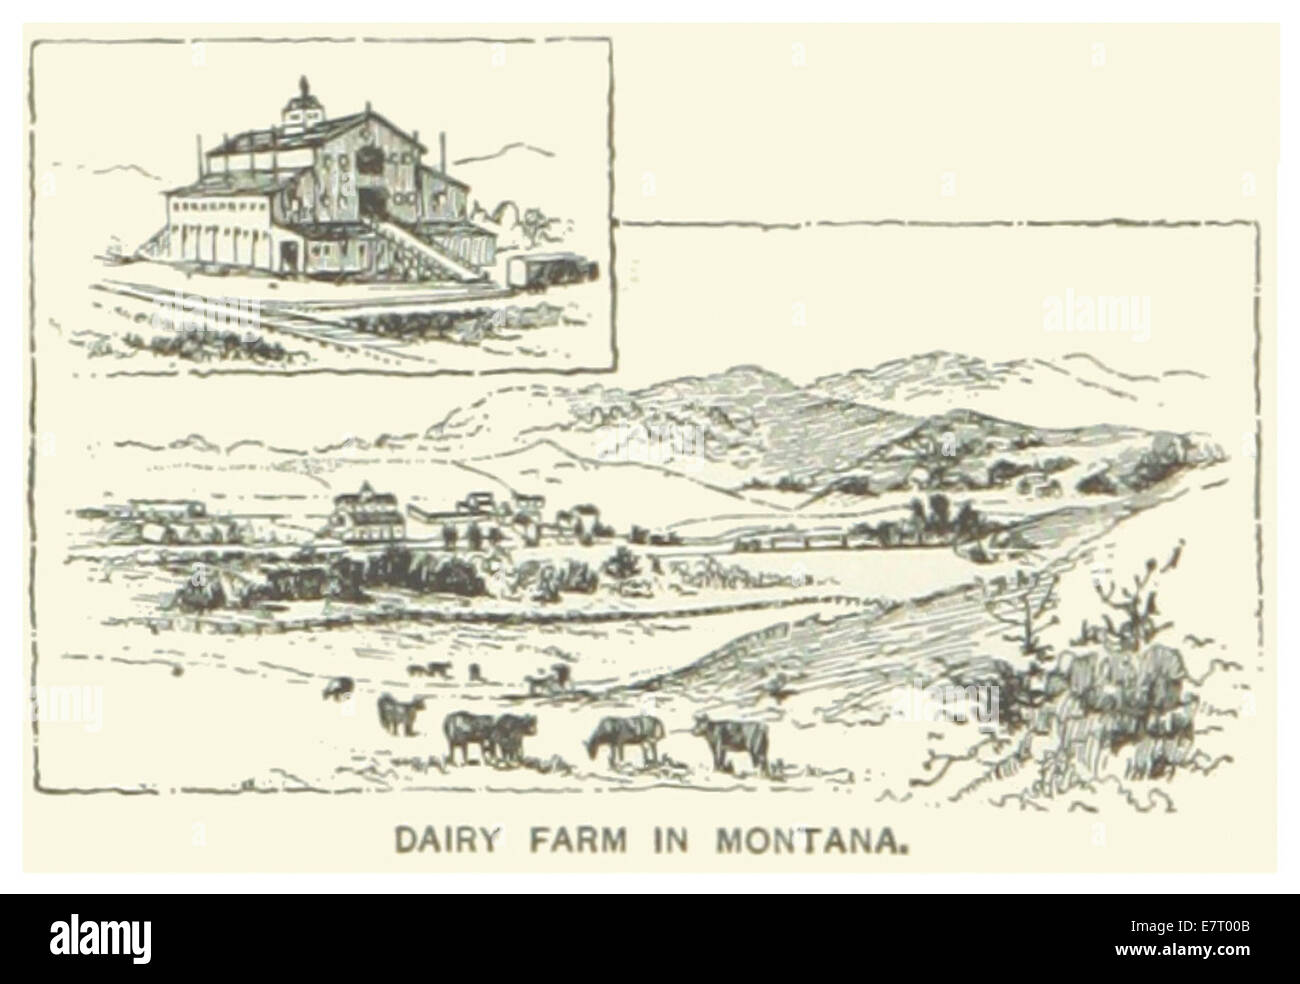 US-MT(1891) p518 DAIRY FARM IN MONTANA Stock Photo